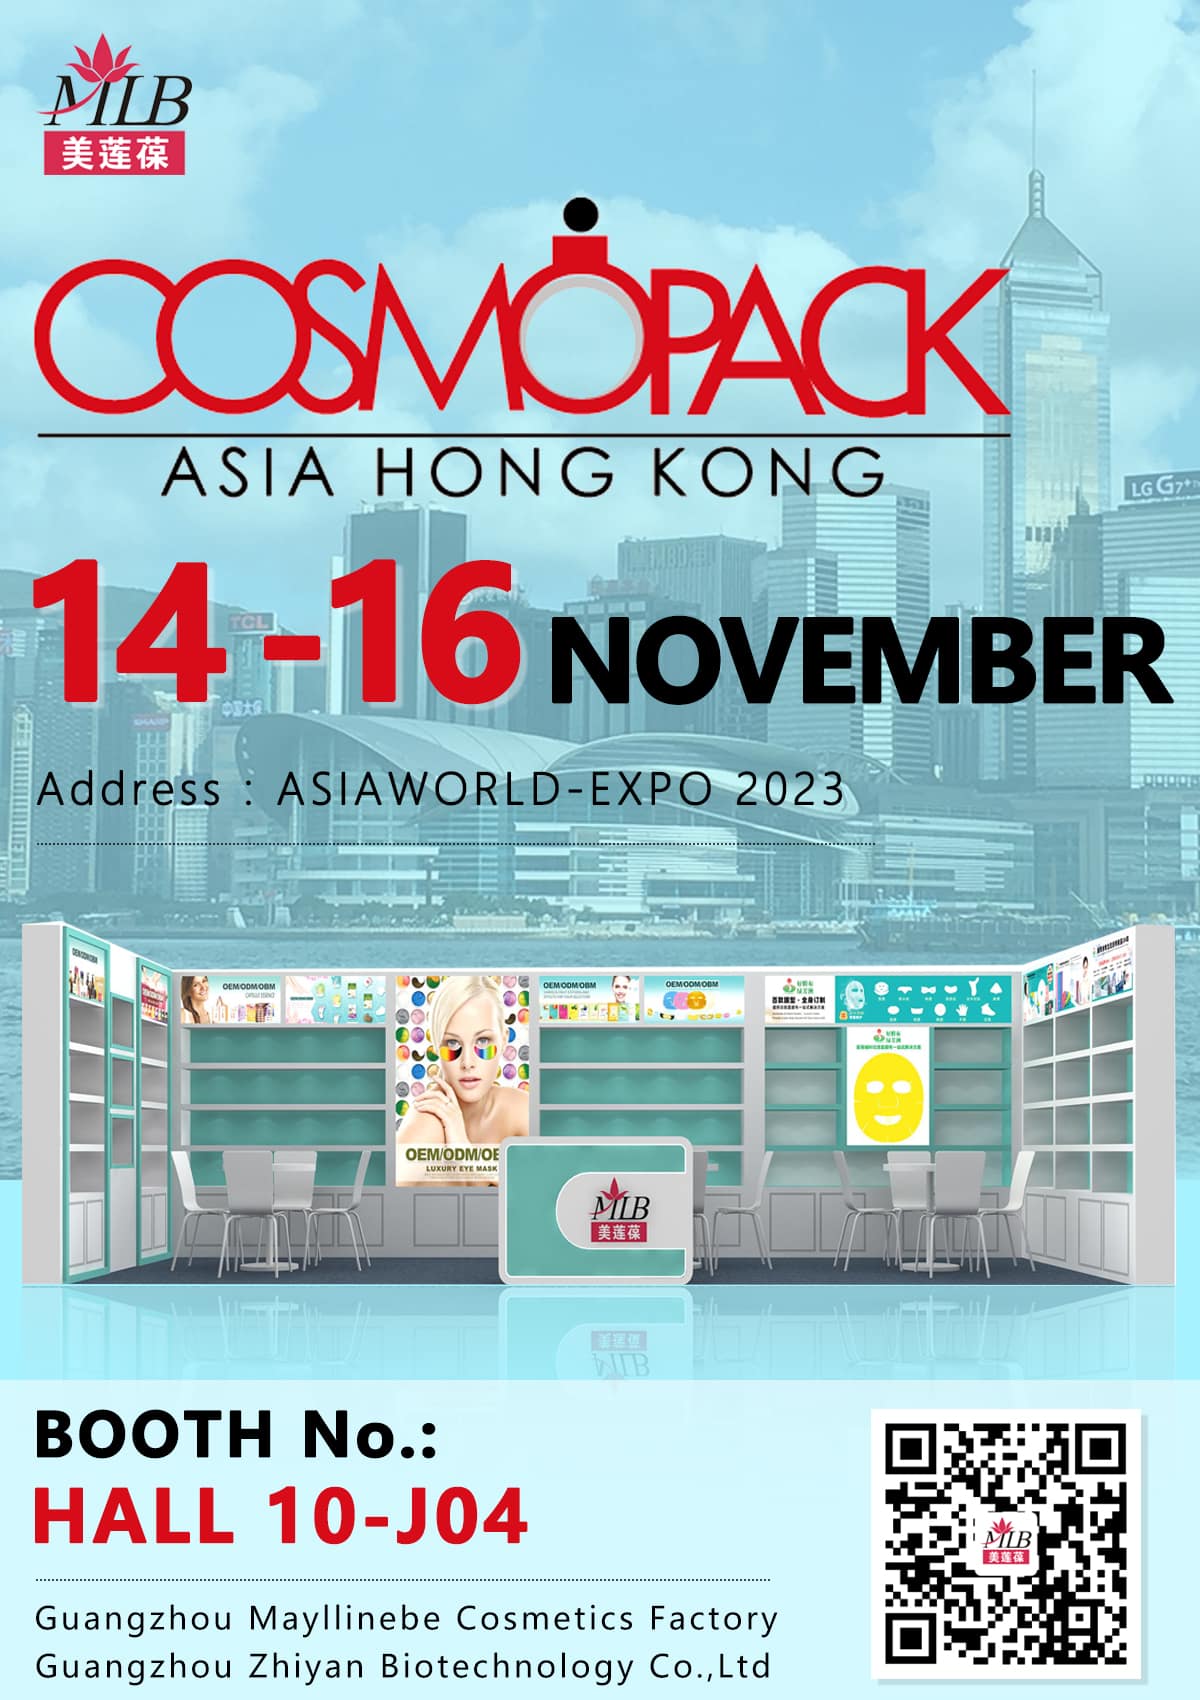 Mayllinebe partecipa alla fiera sulla cura della pelle - Cosmopack Asia Hong Kong 2023